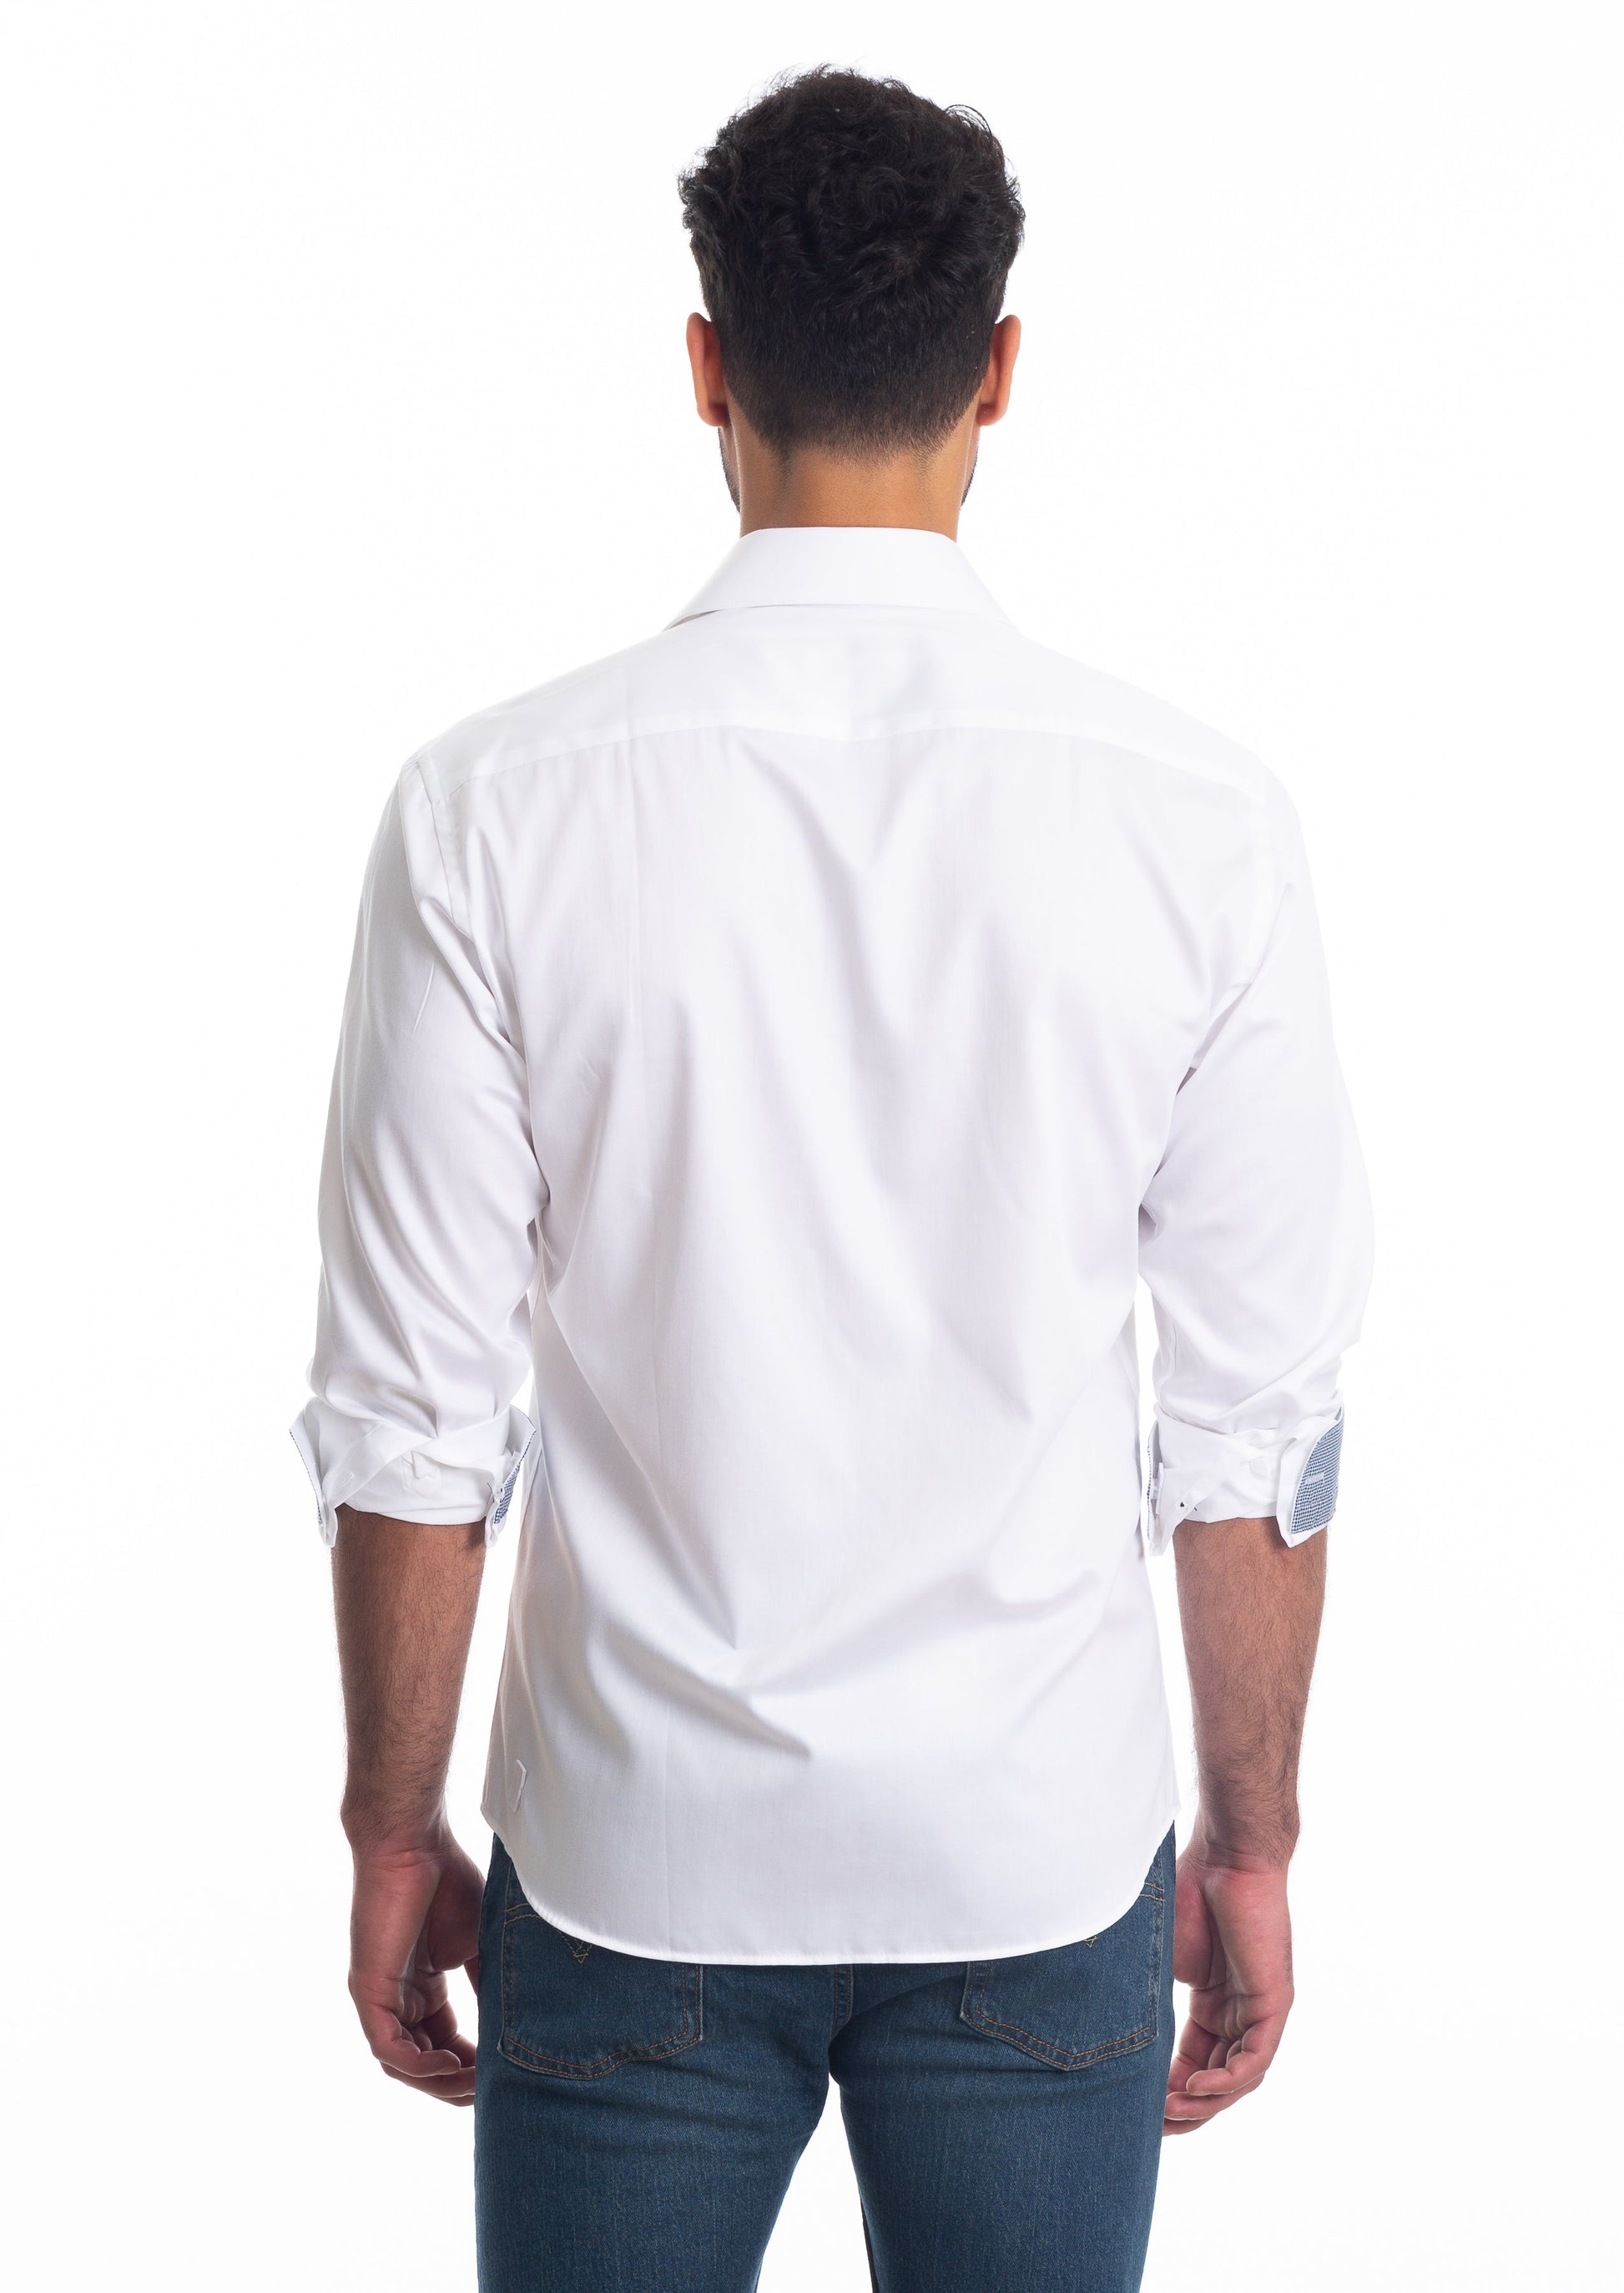 White Long Sleeve Shirt T-6819 Back